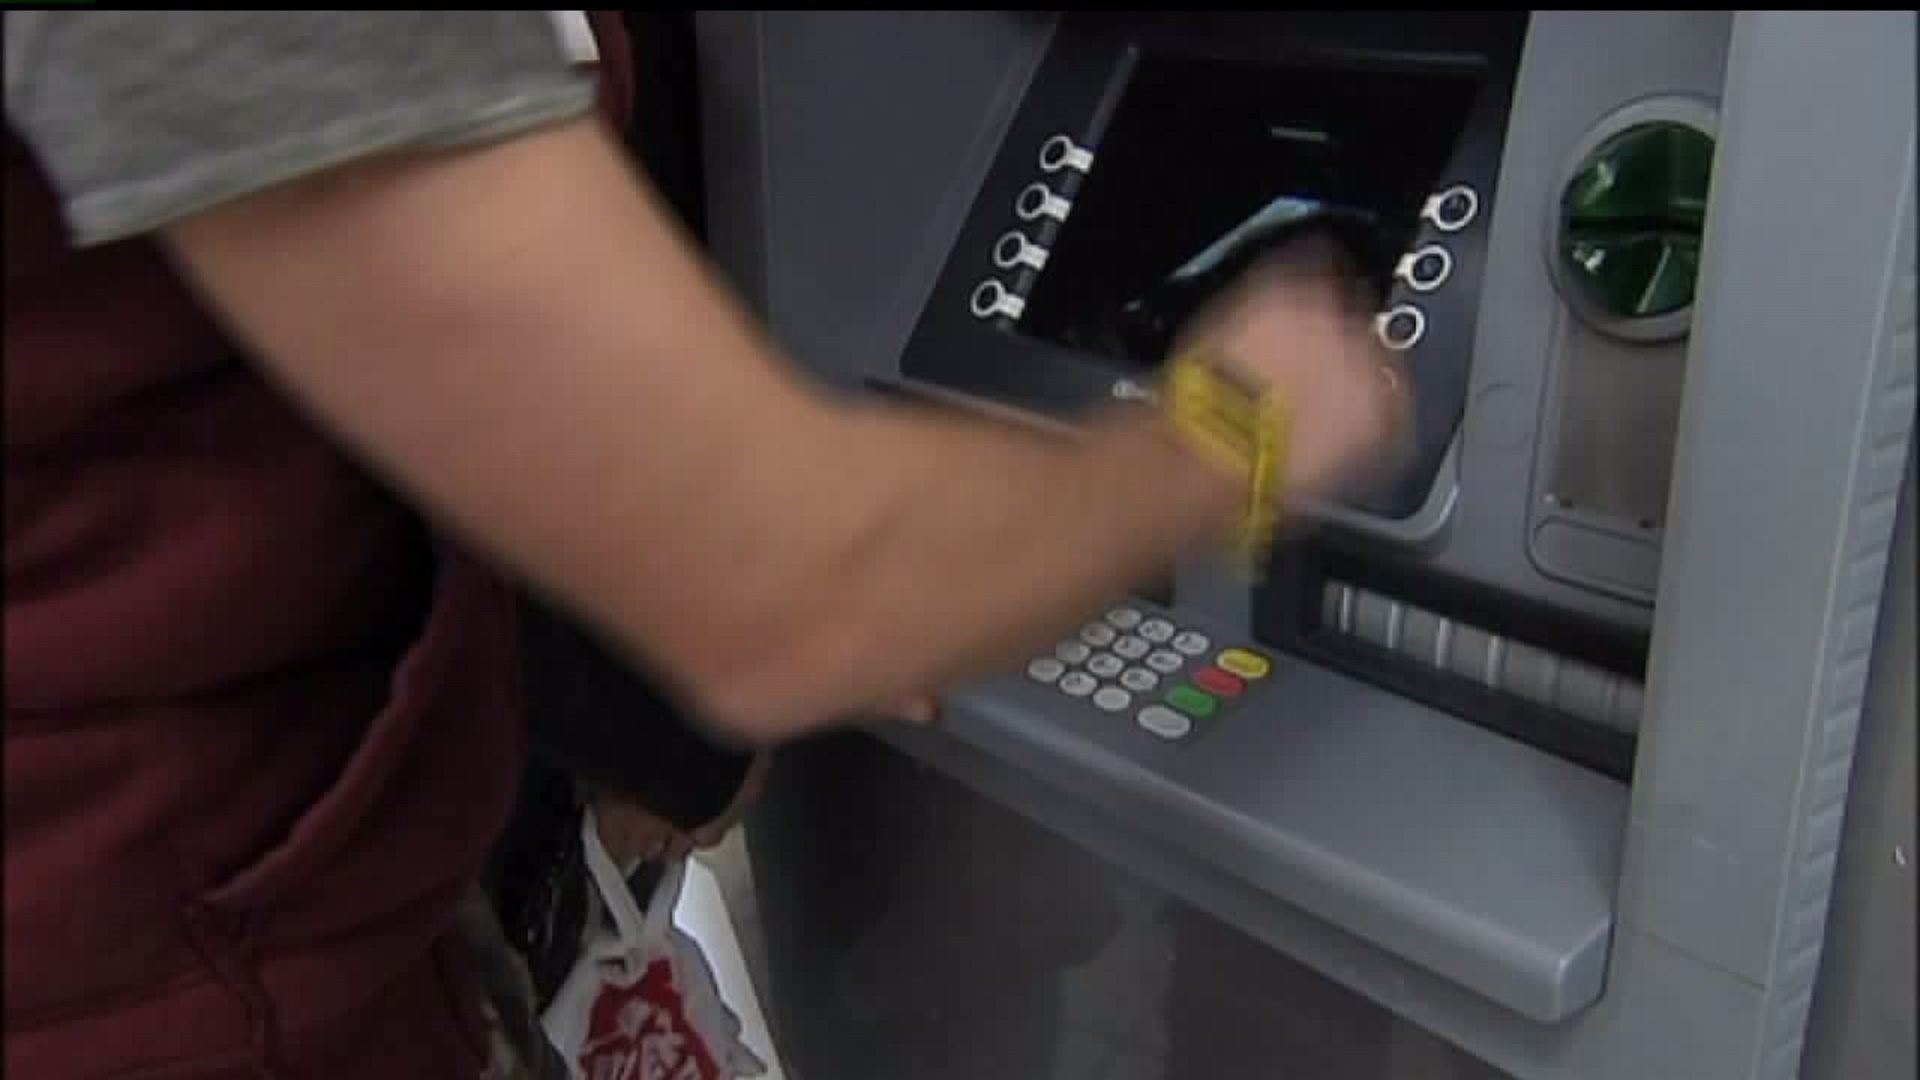 State representative pushing legislation to crack down on credit card skimming